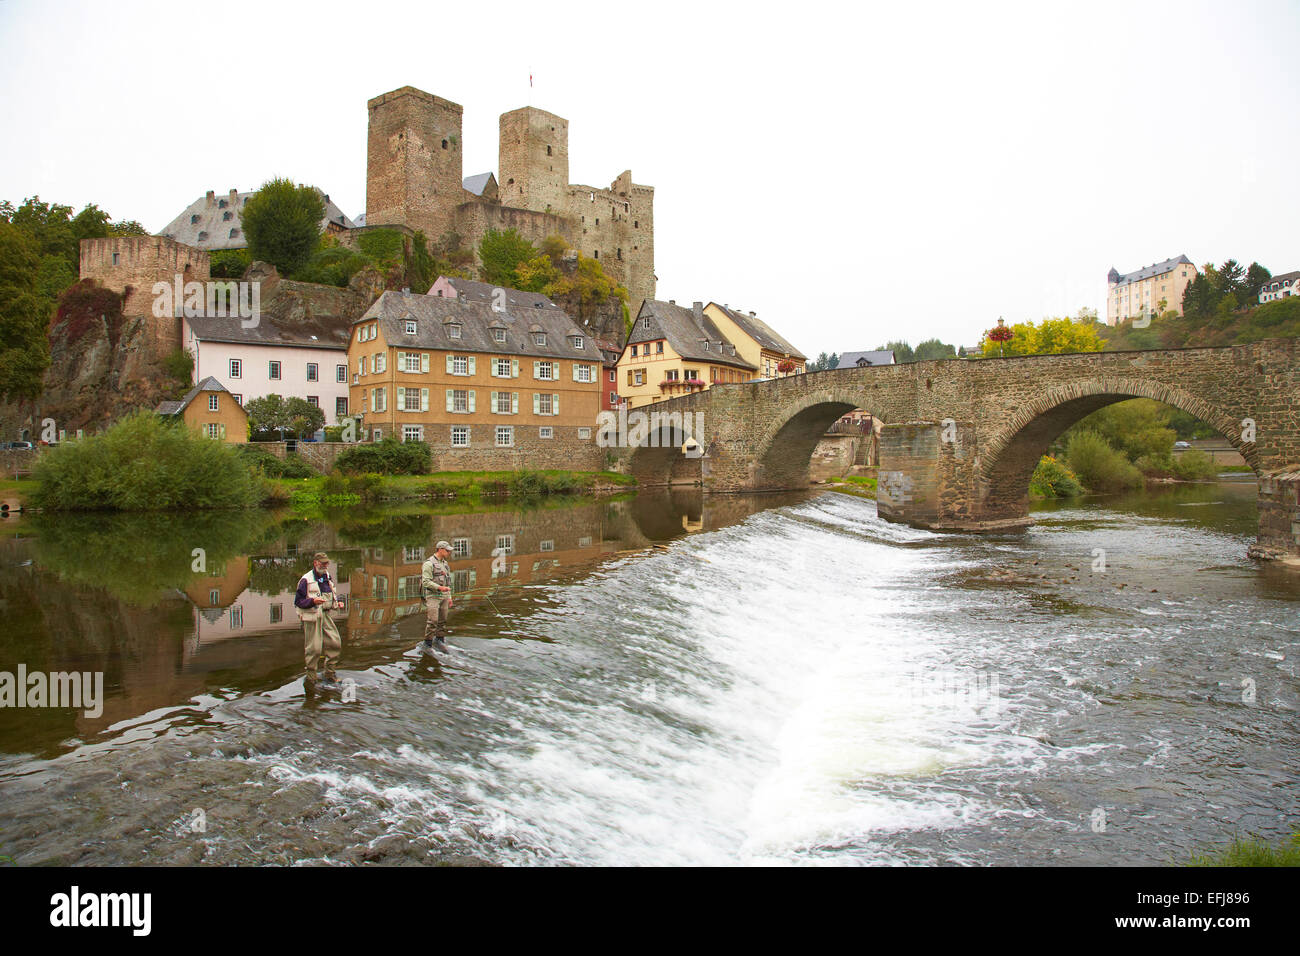 Il castello di Runkel e arco in pietra bridge, Runkel, Westerwald, Taunus, Hesse, Germania, Europa Foto Stock